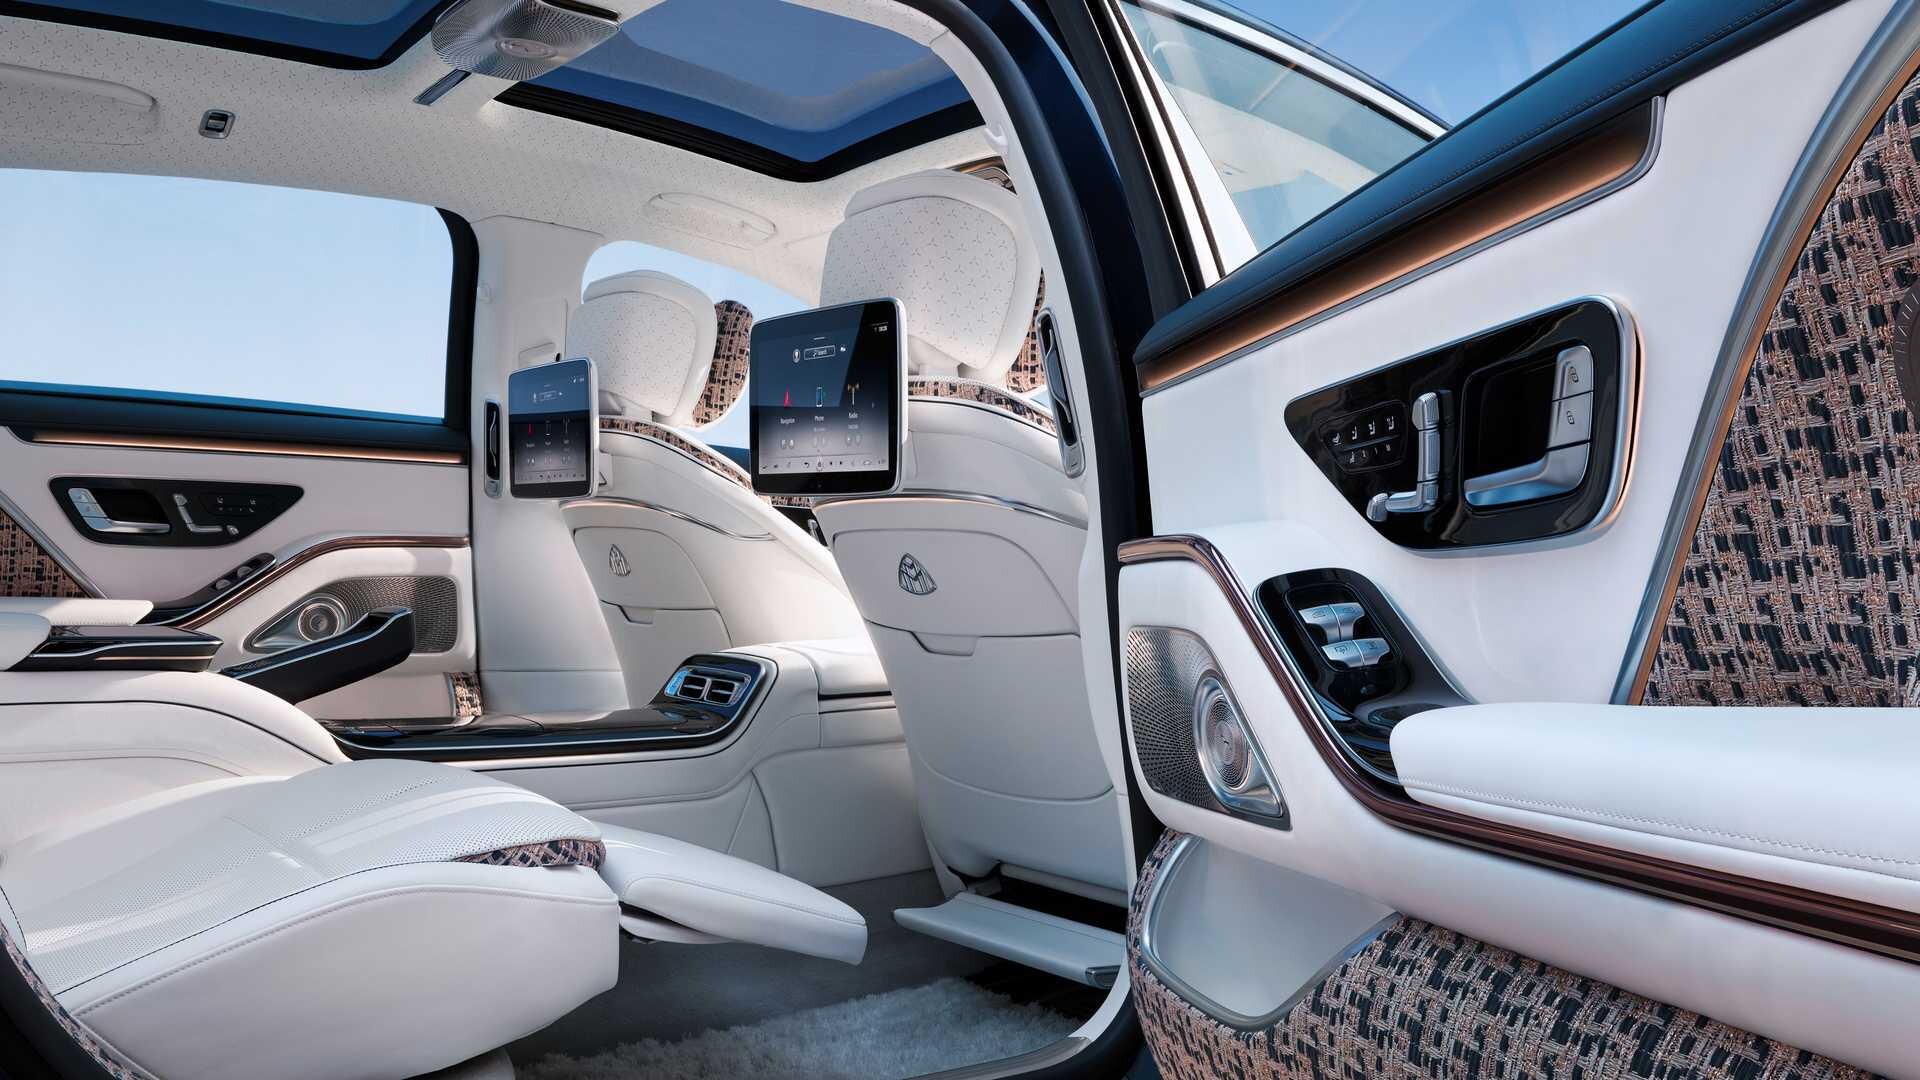 https://citymagazine.si/de/mercedes-maybach-s-haute-voiture-prestige-limousine-fur-modische-gourmets/mercedes-maybach-s-class-haute-voiture-5/